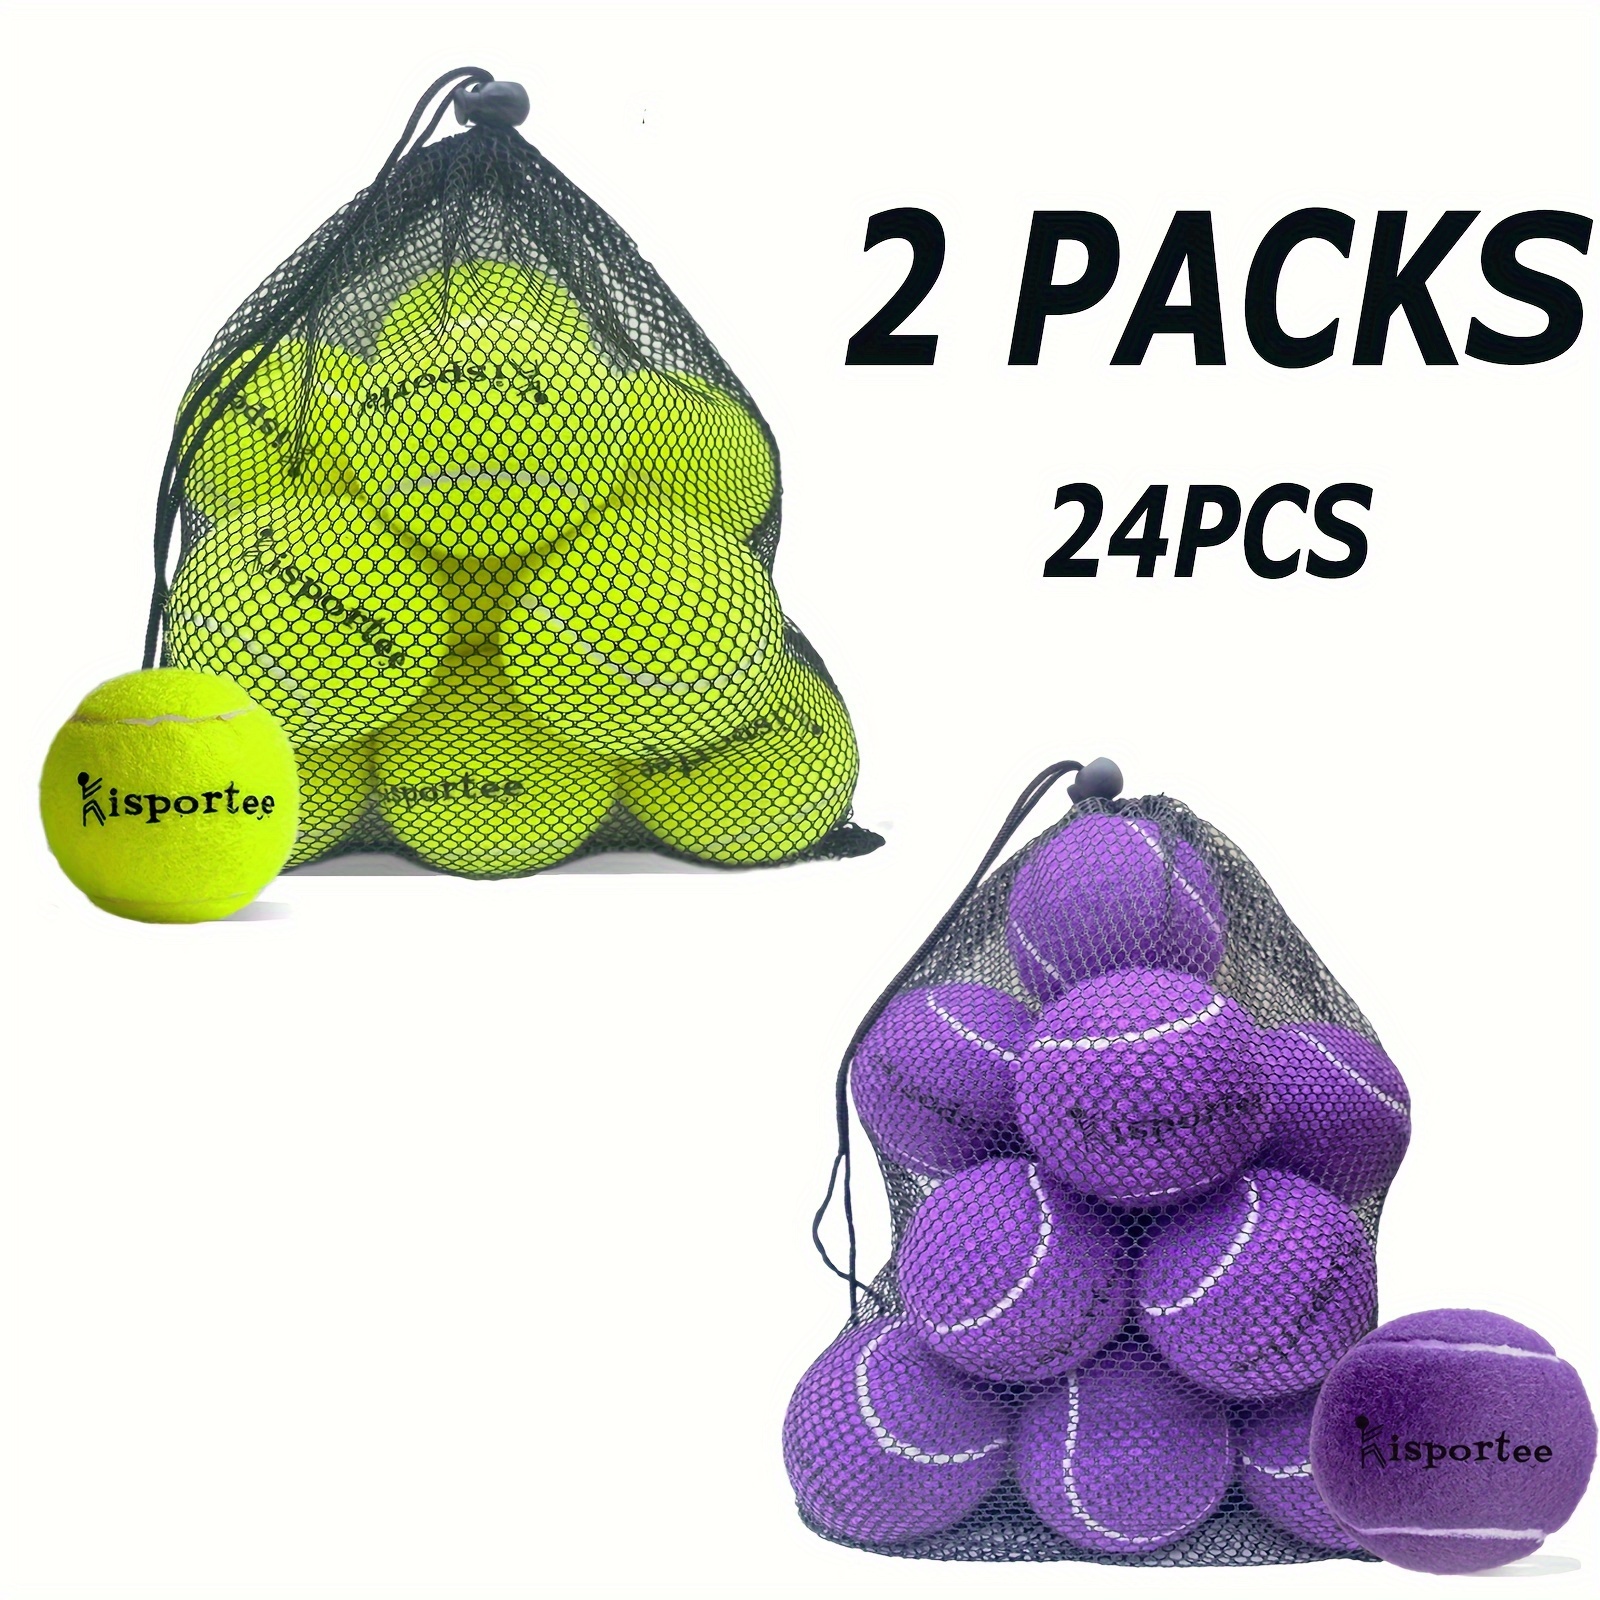 

24pcs Tennis Balls, Tennis Practice Balls, With Mesh Bag, For Beginner Training